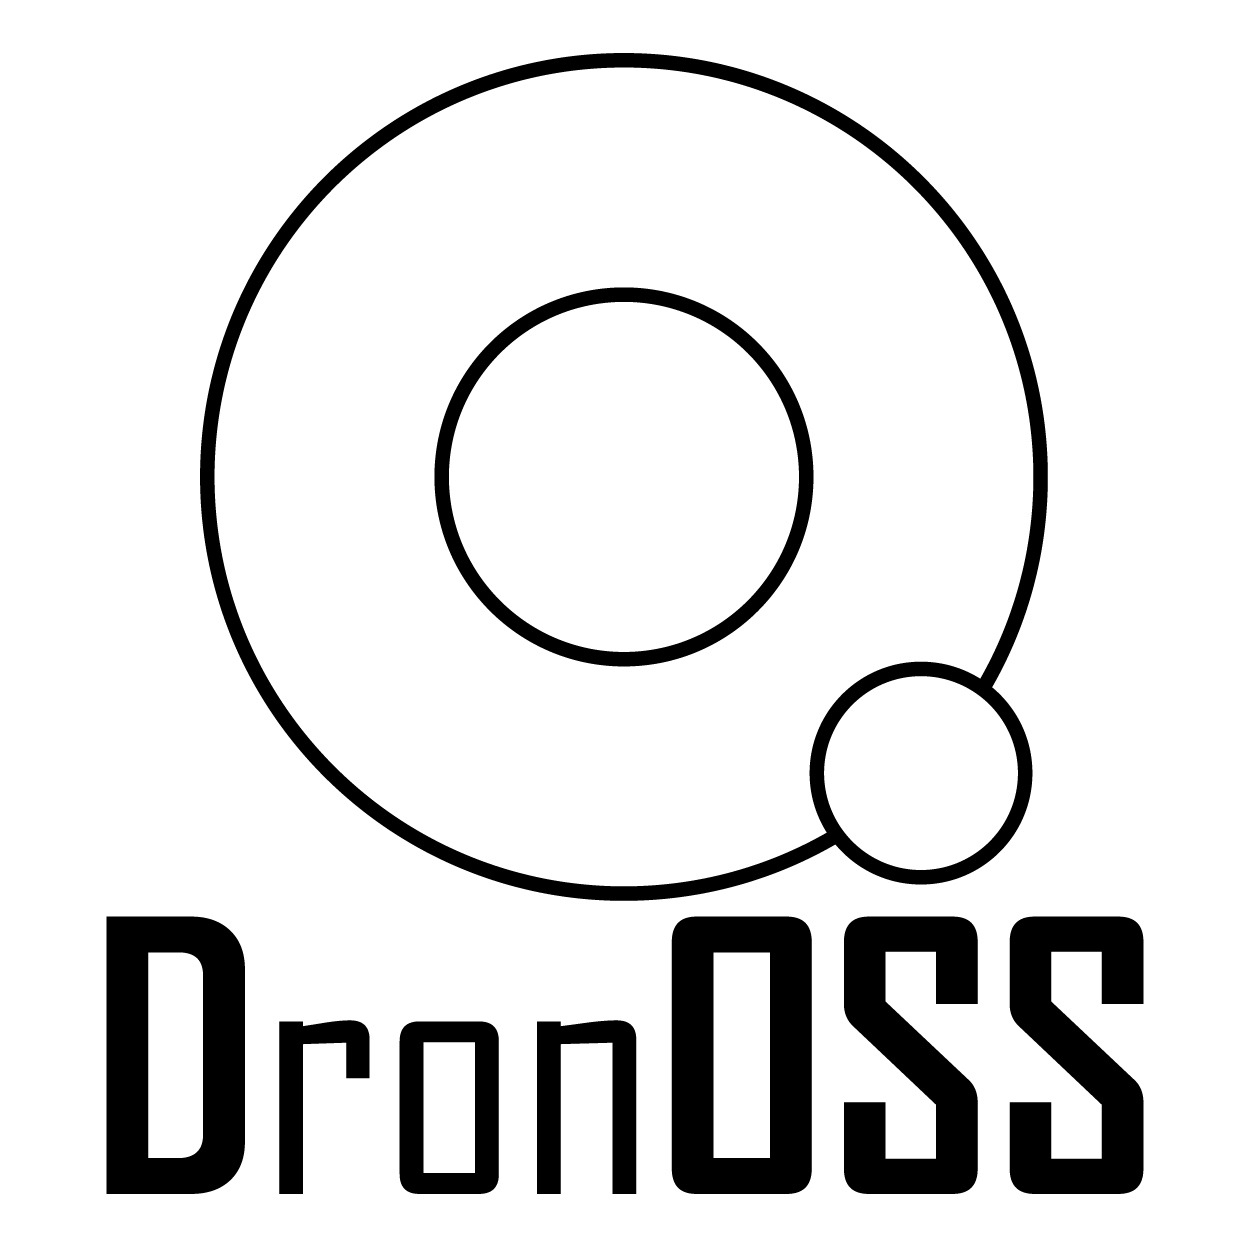 DronOSS